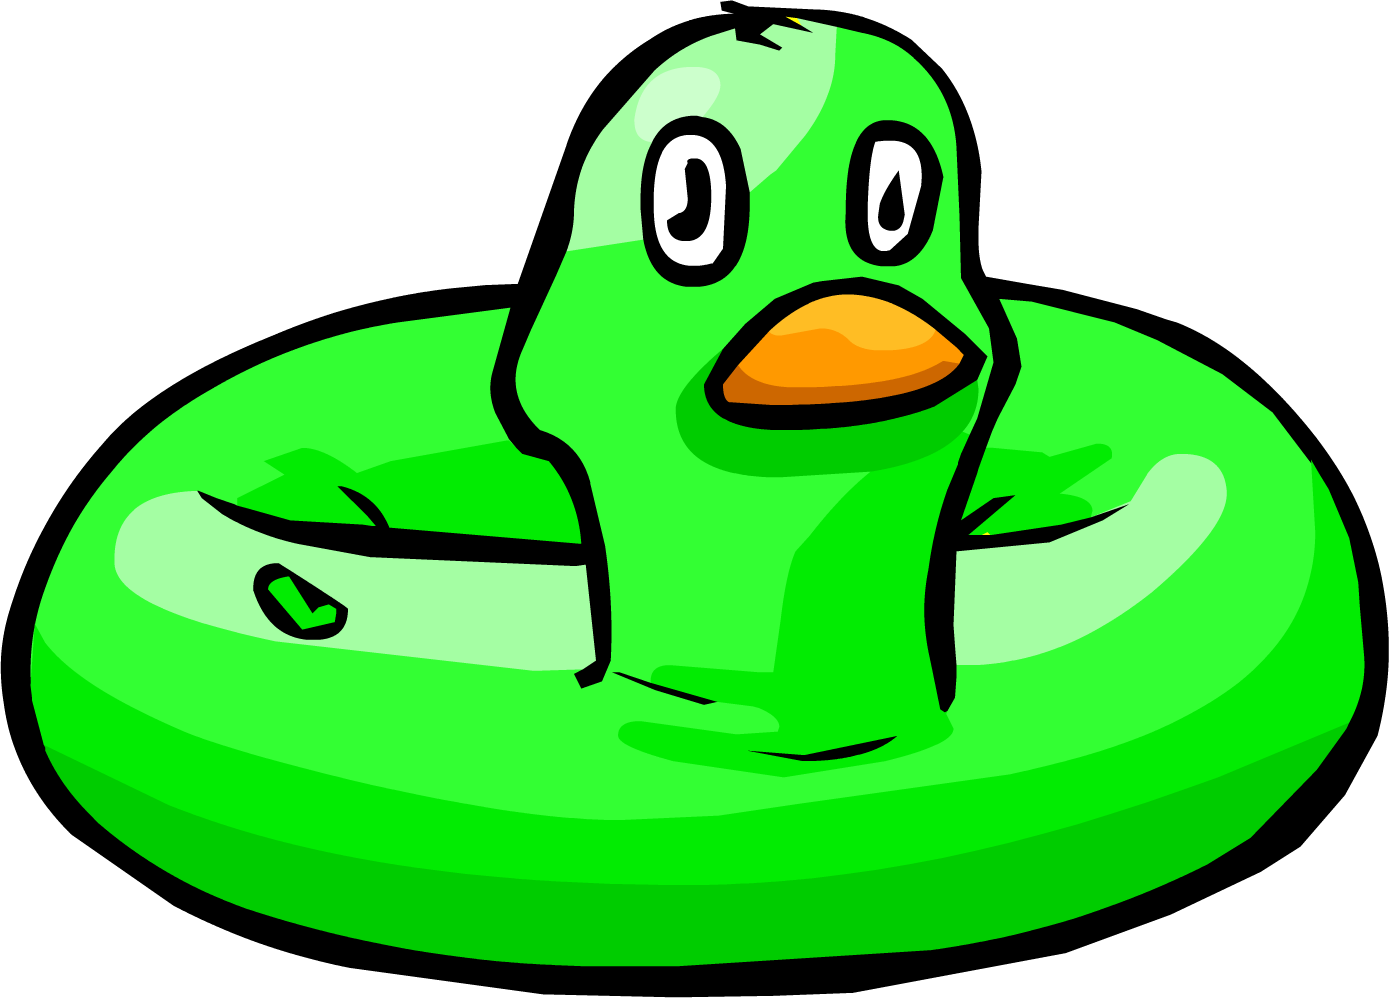 Green Duck - Club Penguin Inflatable Duck (1389x998)